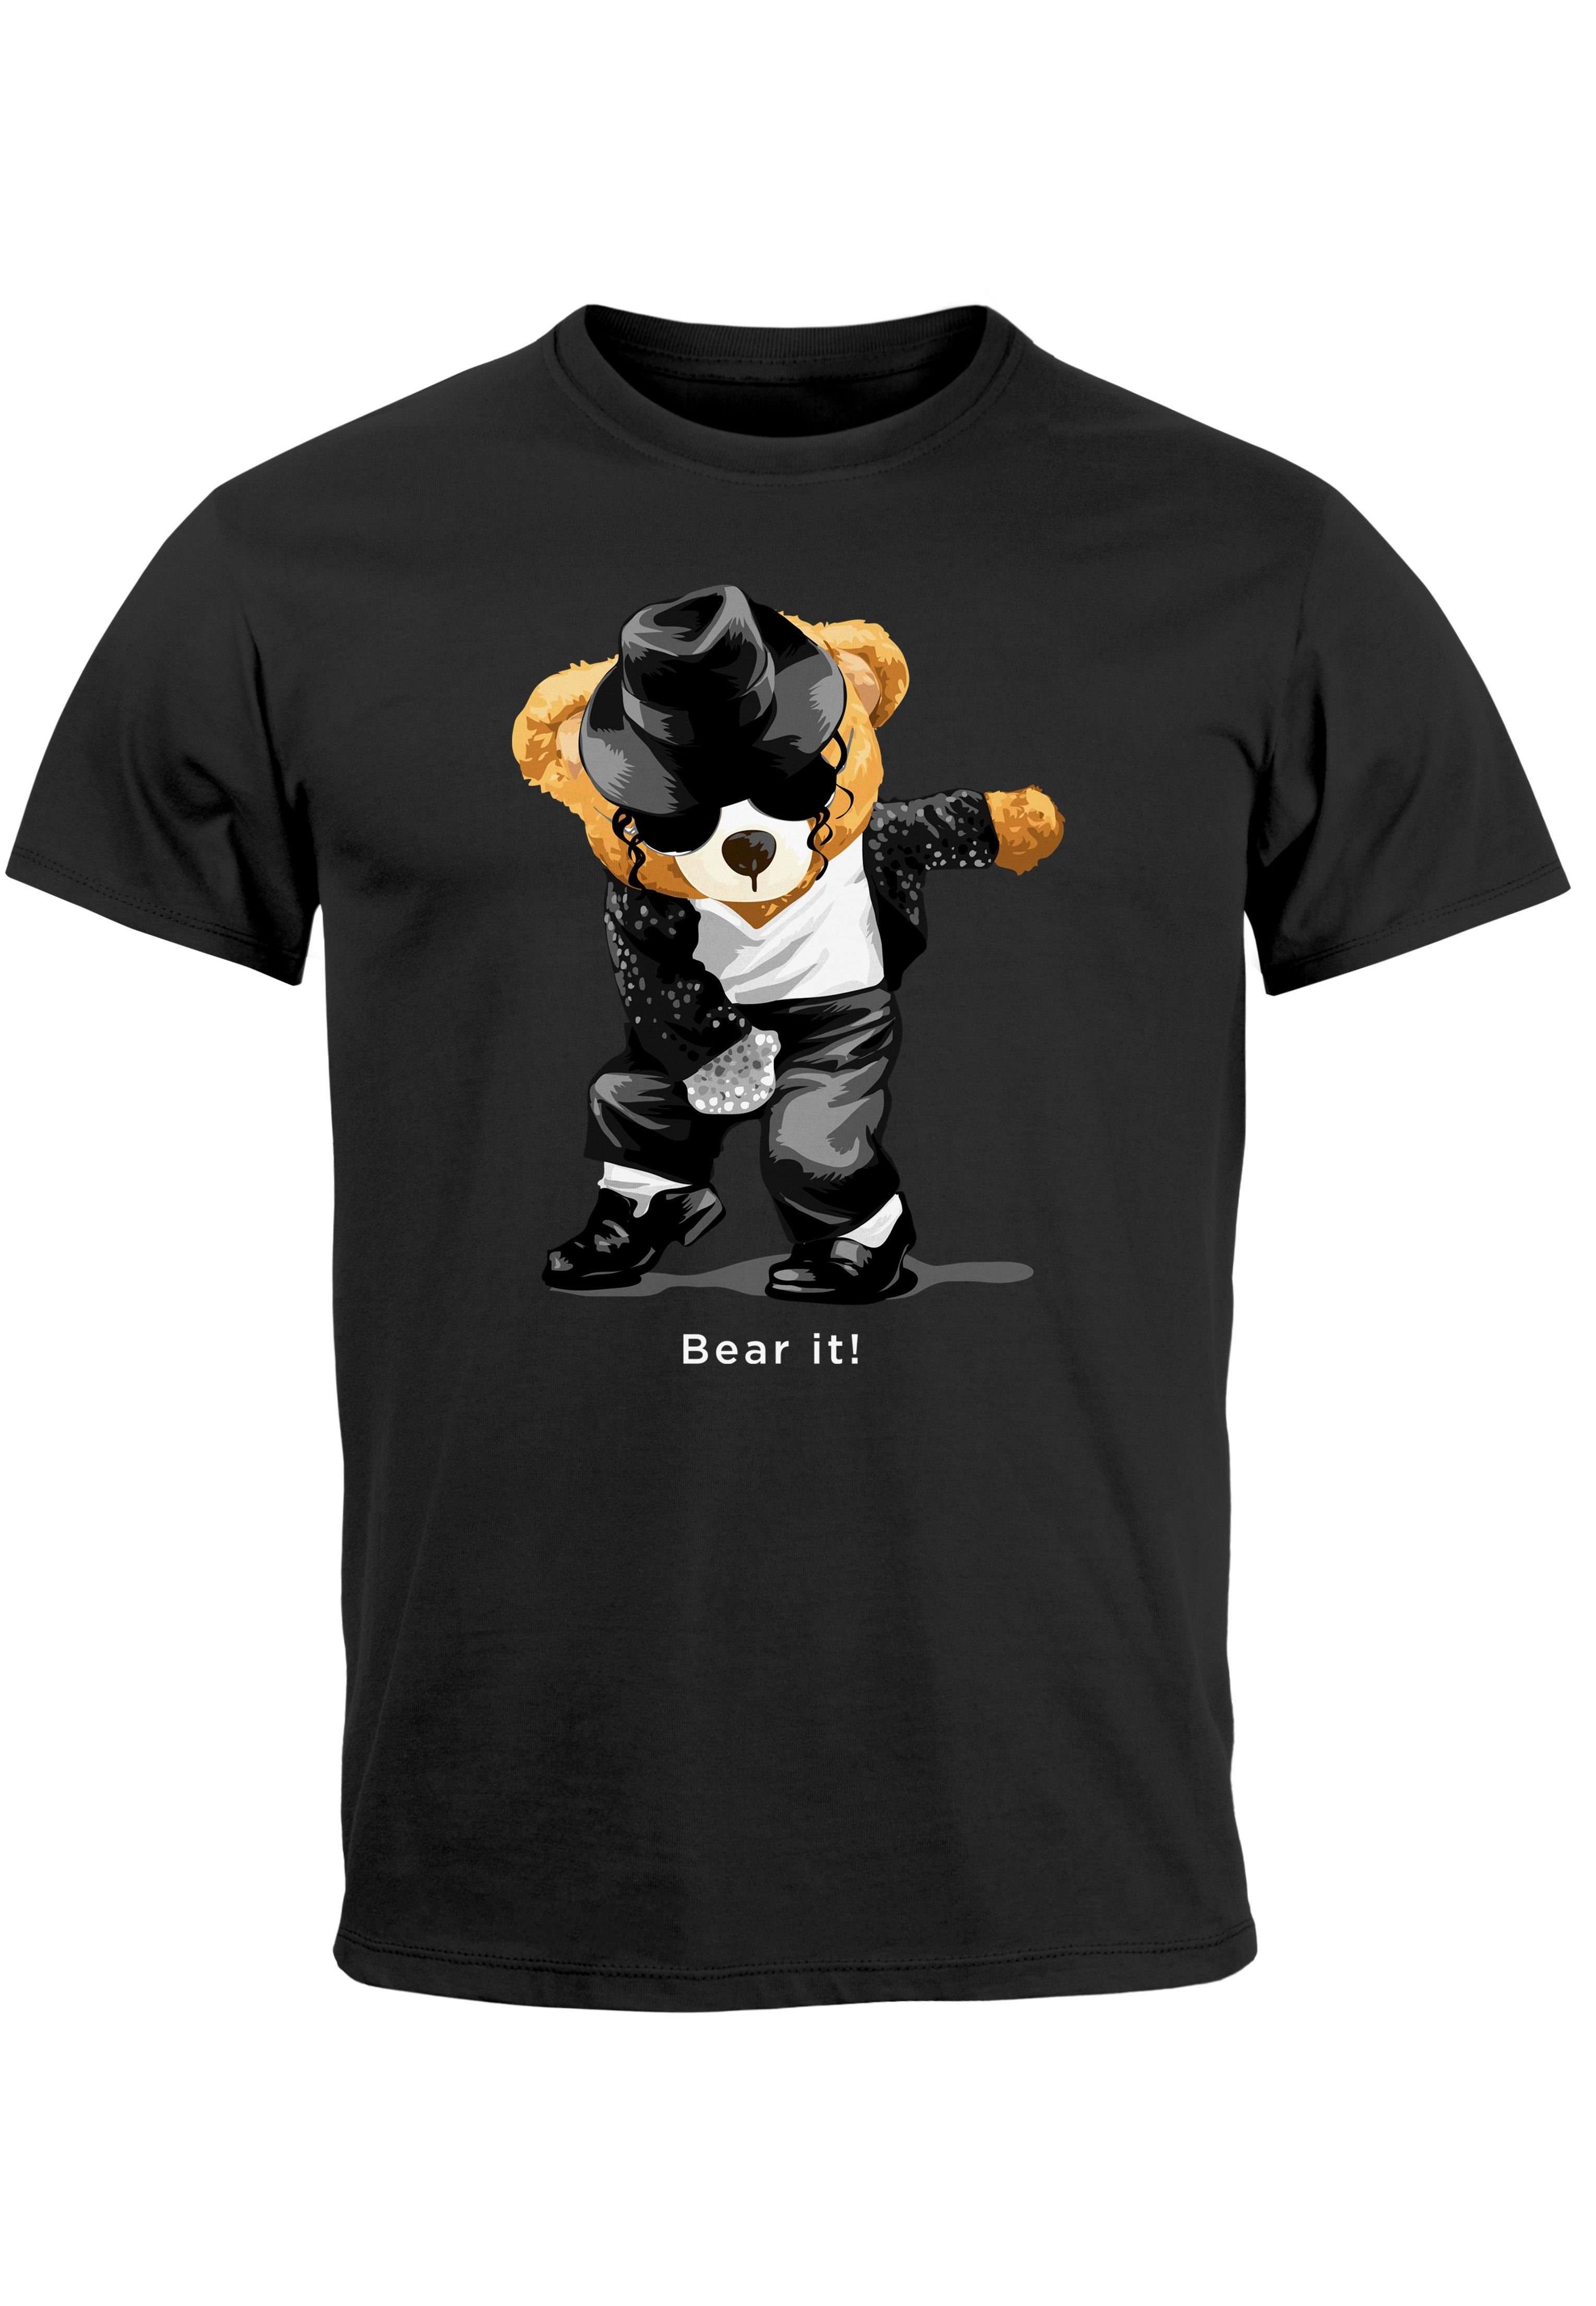 Neverless Print-Shirt Herren T-Shirt Jackson Bear Parodie Bear it! Teddy Bär Musik Print Auf mit Print schwarz